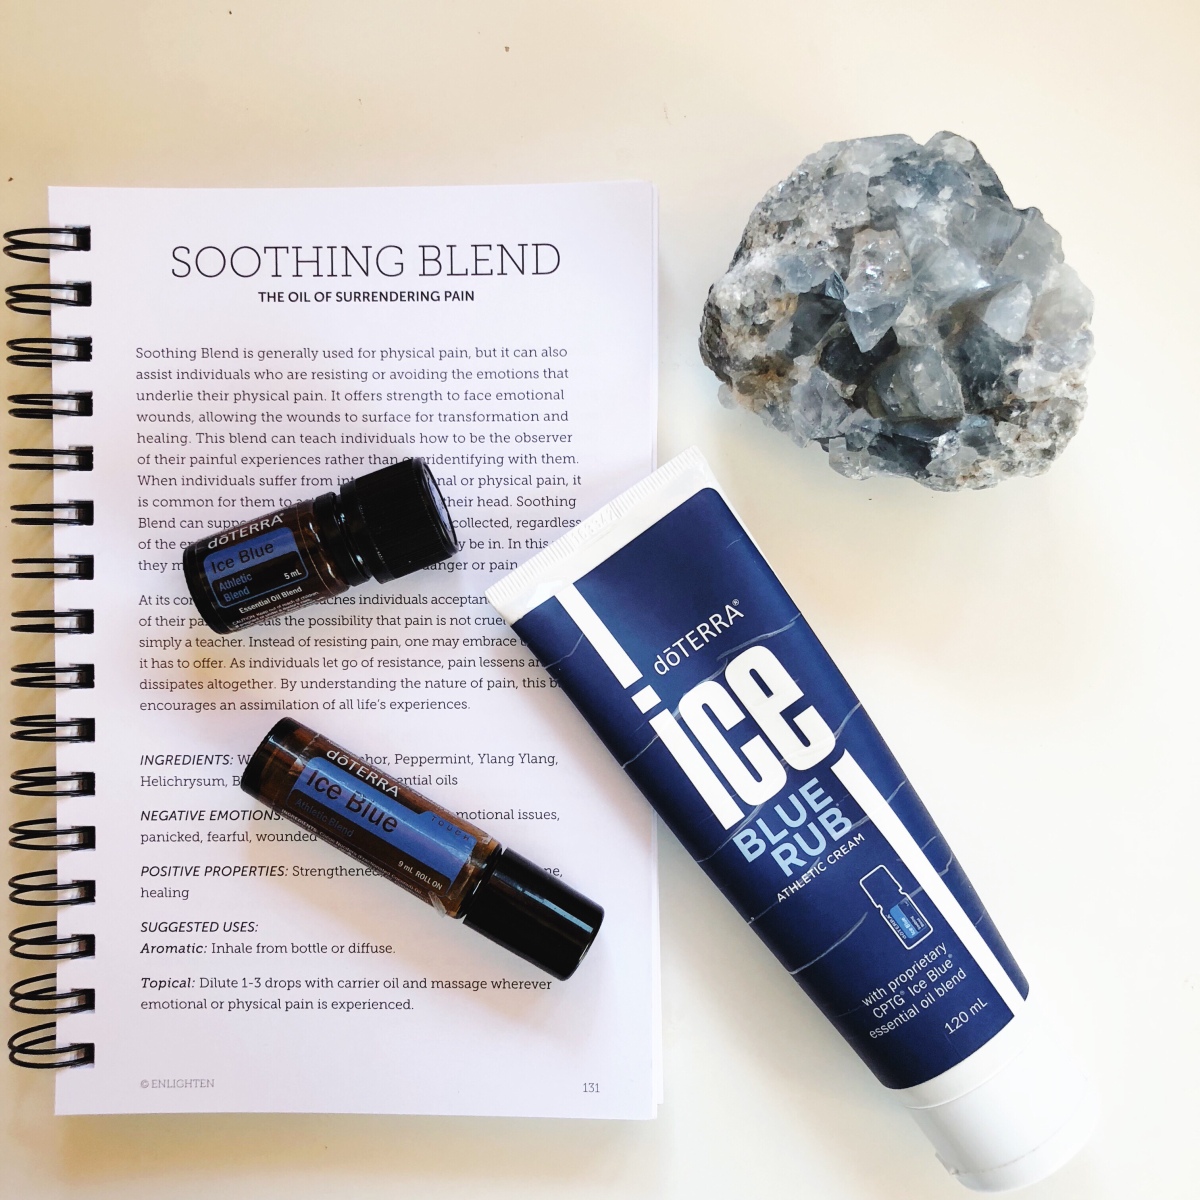 Ice Blue – oil, roller or rub?